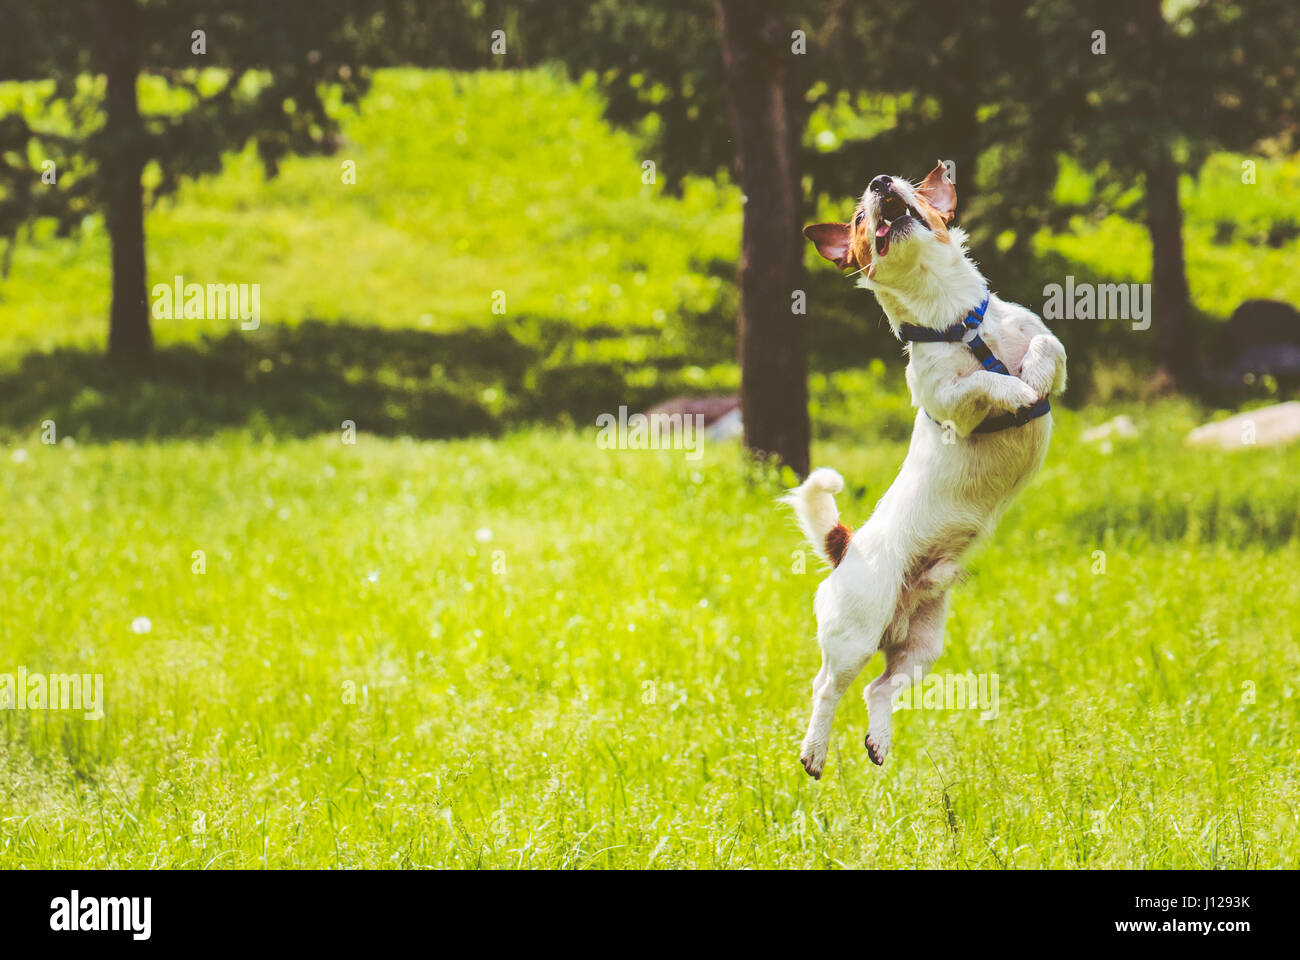 Dog springs into action jumping at park lawn at hot summer day Stock Photo